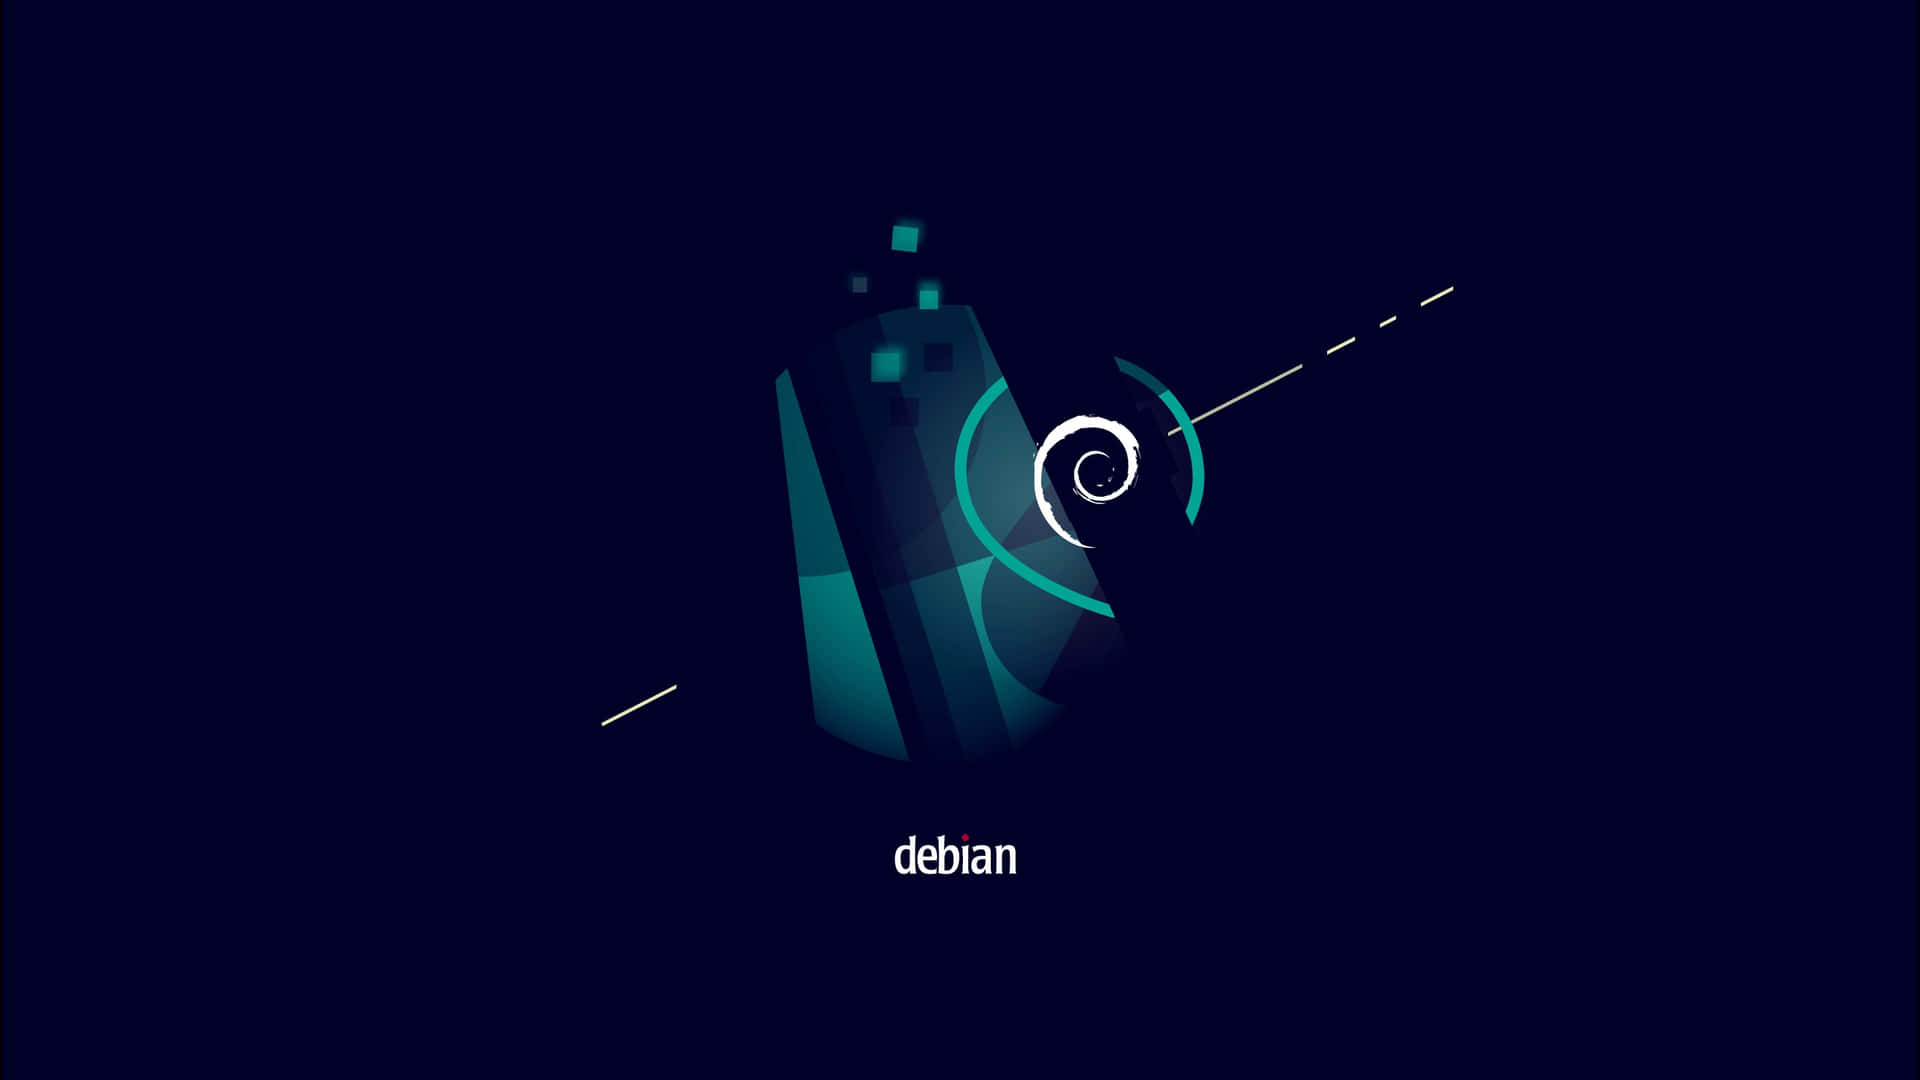 Debian Abstract Art Wallpaper Wallpaper